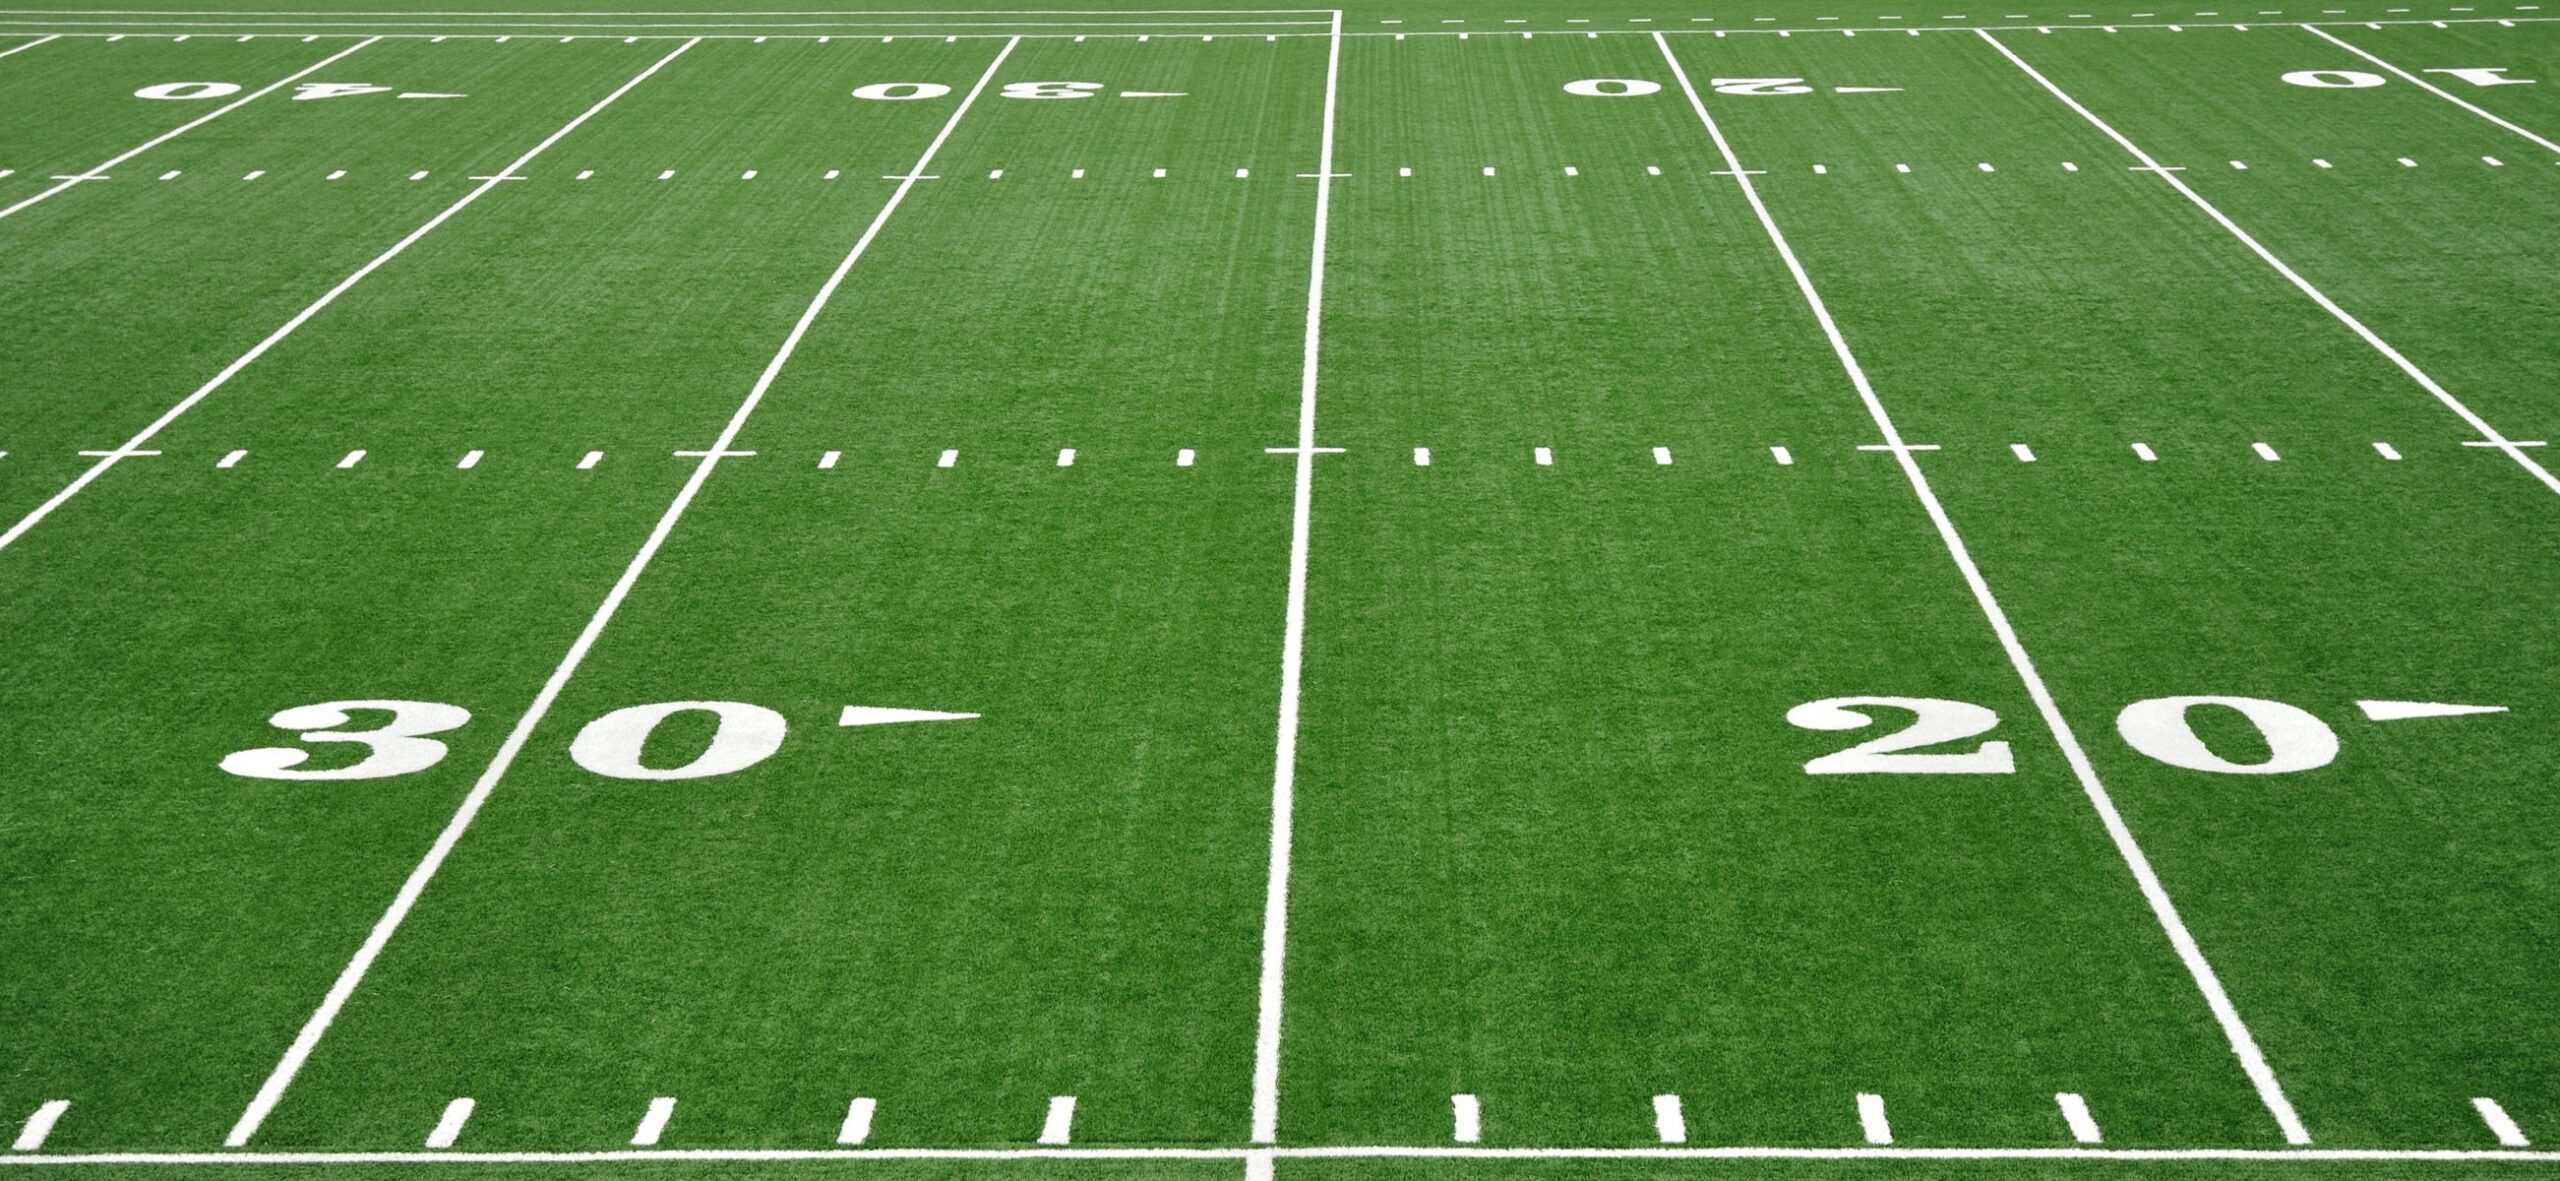 Football Field Blank Template - Imgflip Regarding Blank Football Field Template